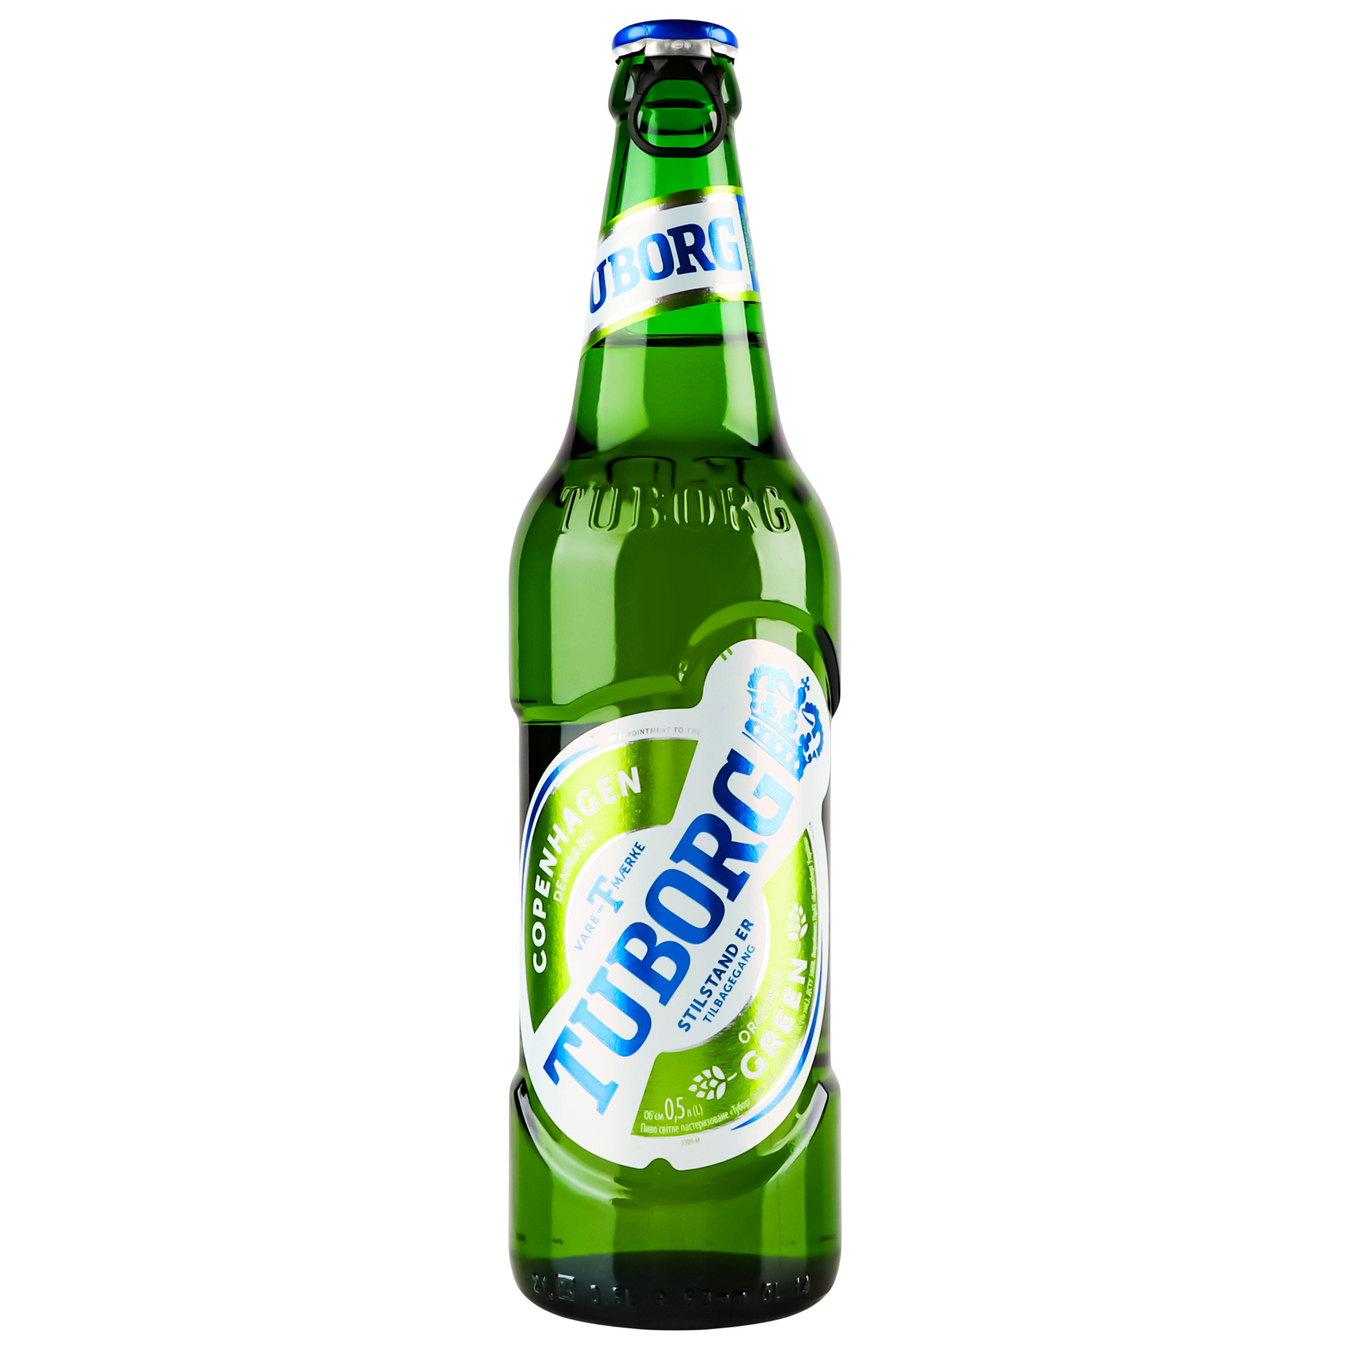 Пиво Tuborg Green світле пастеризоване 4.6% 0.5л